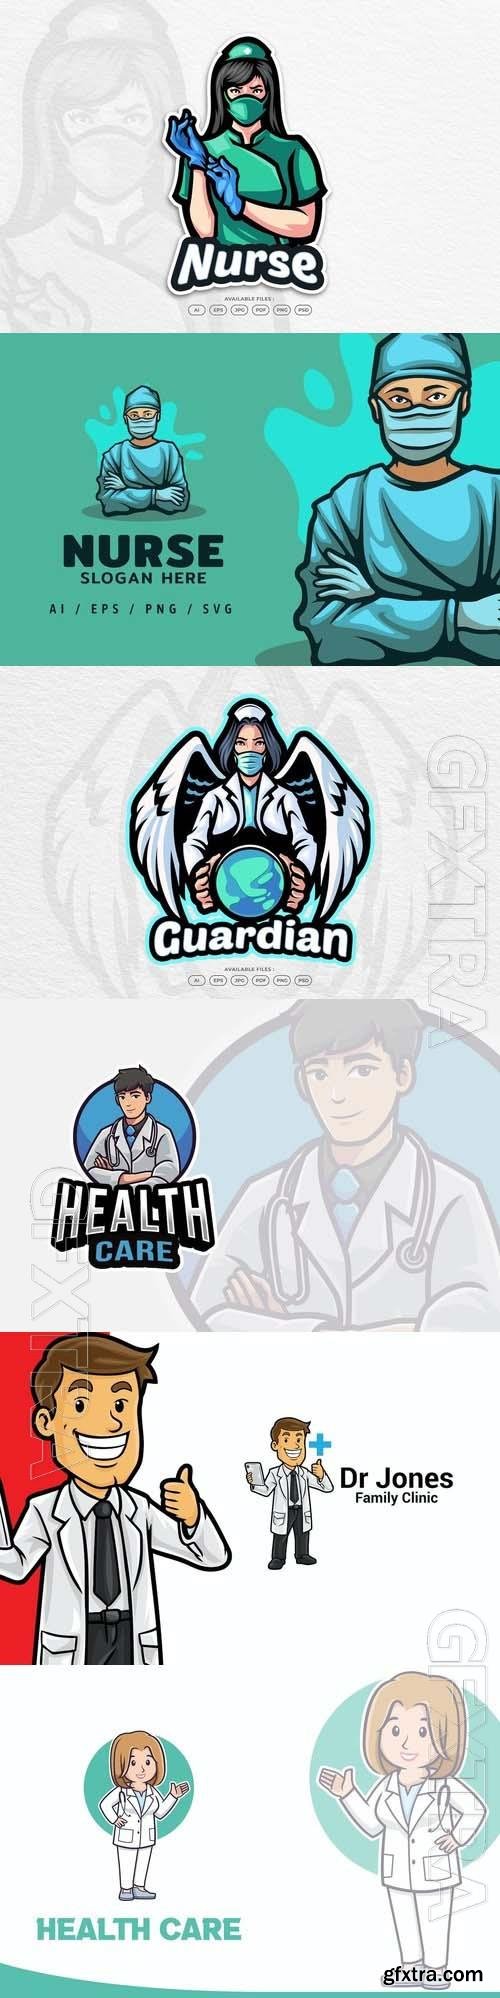 Medical health care clinic logo template